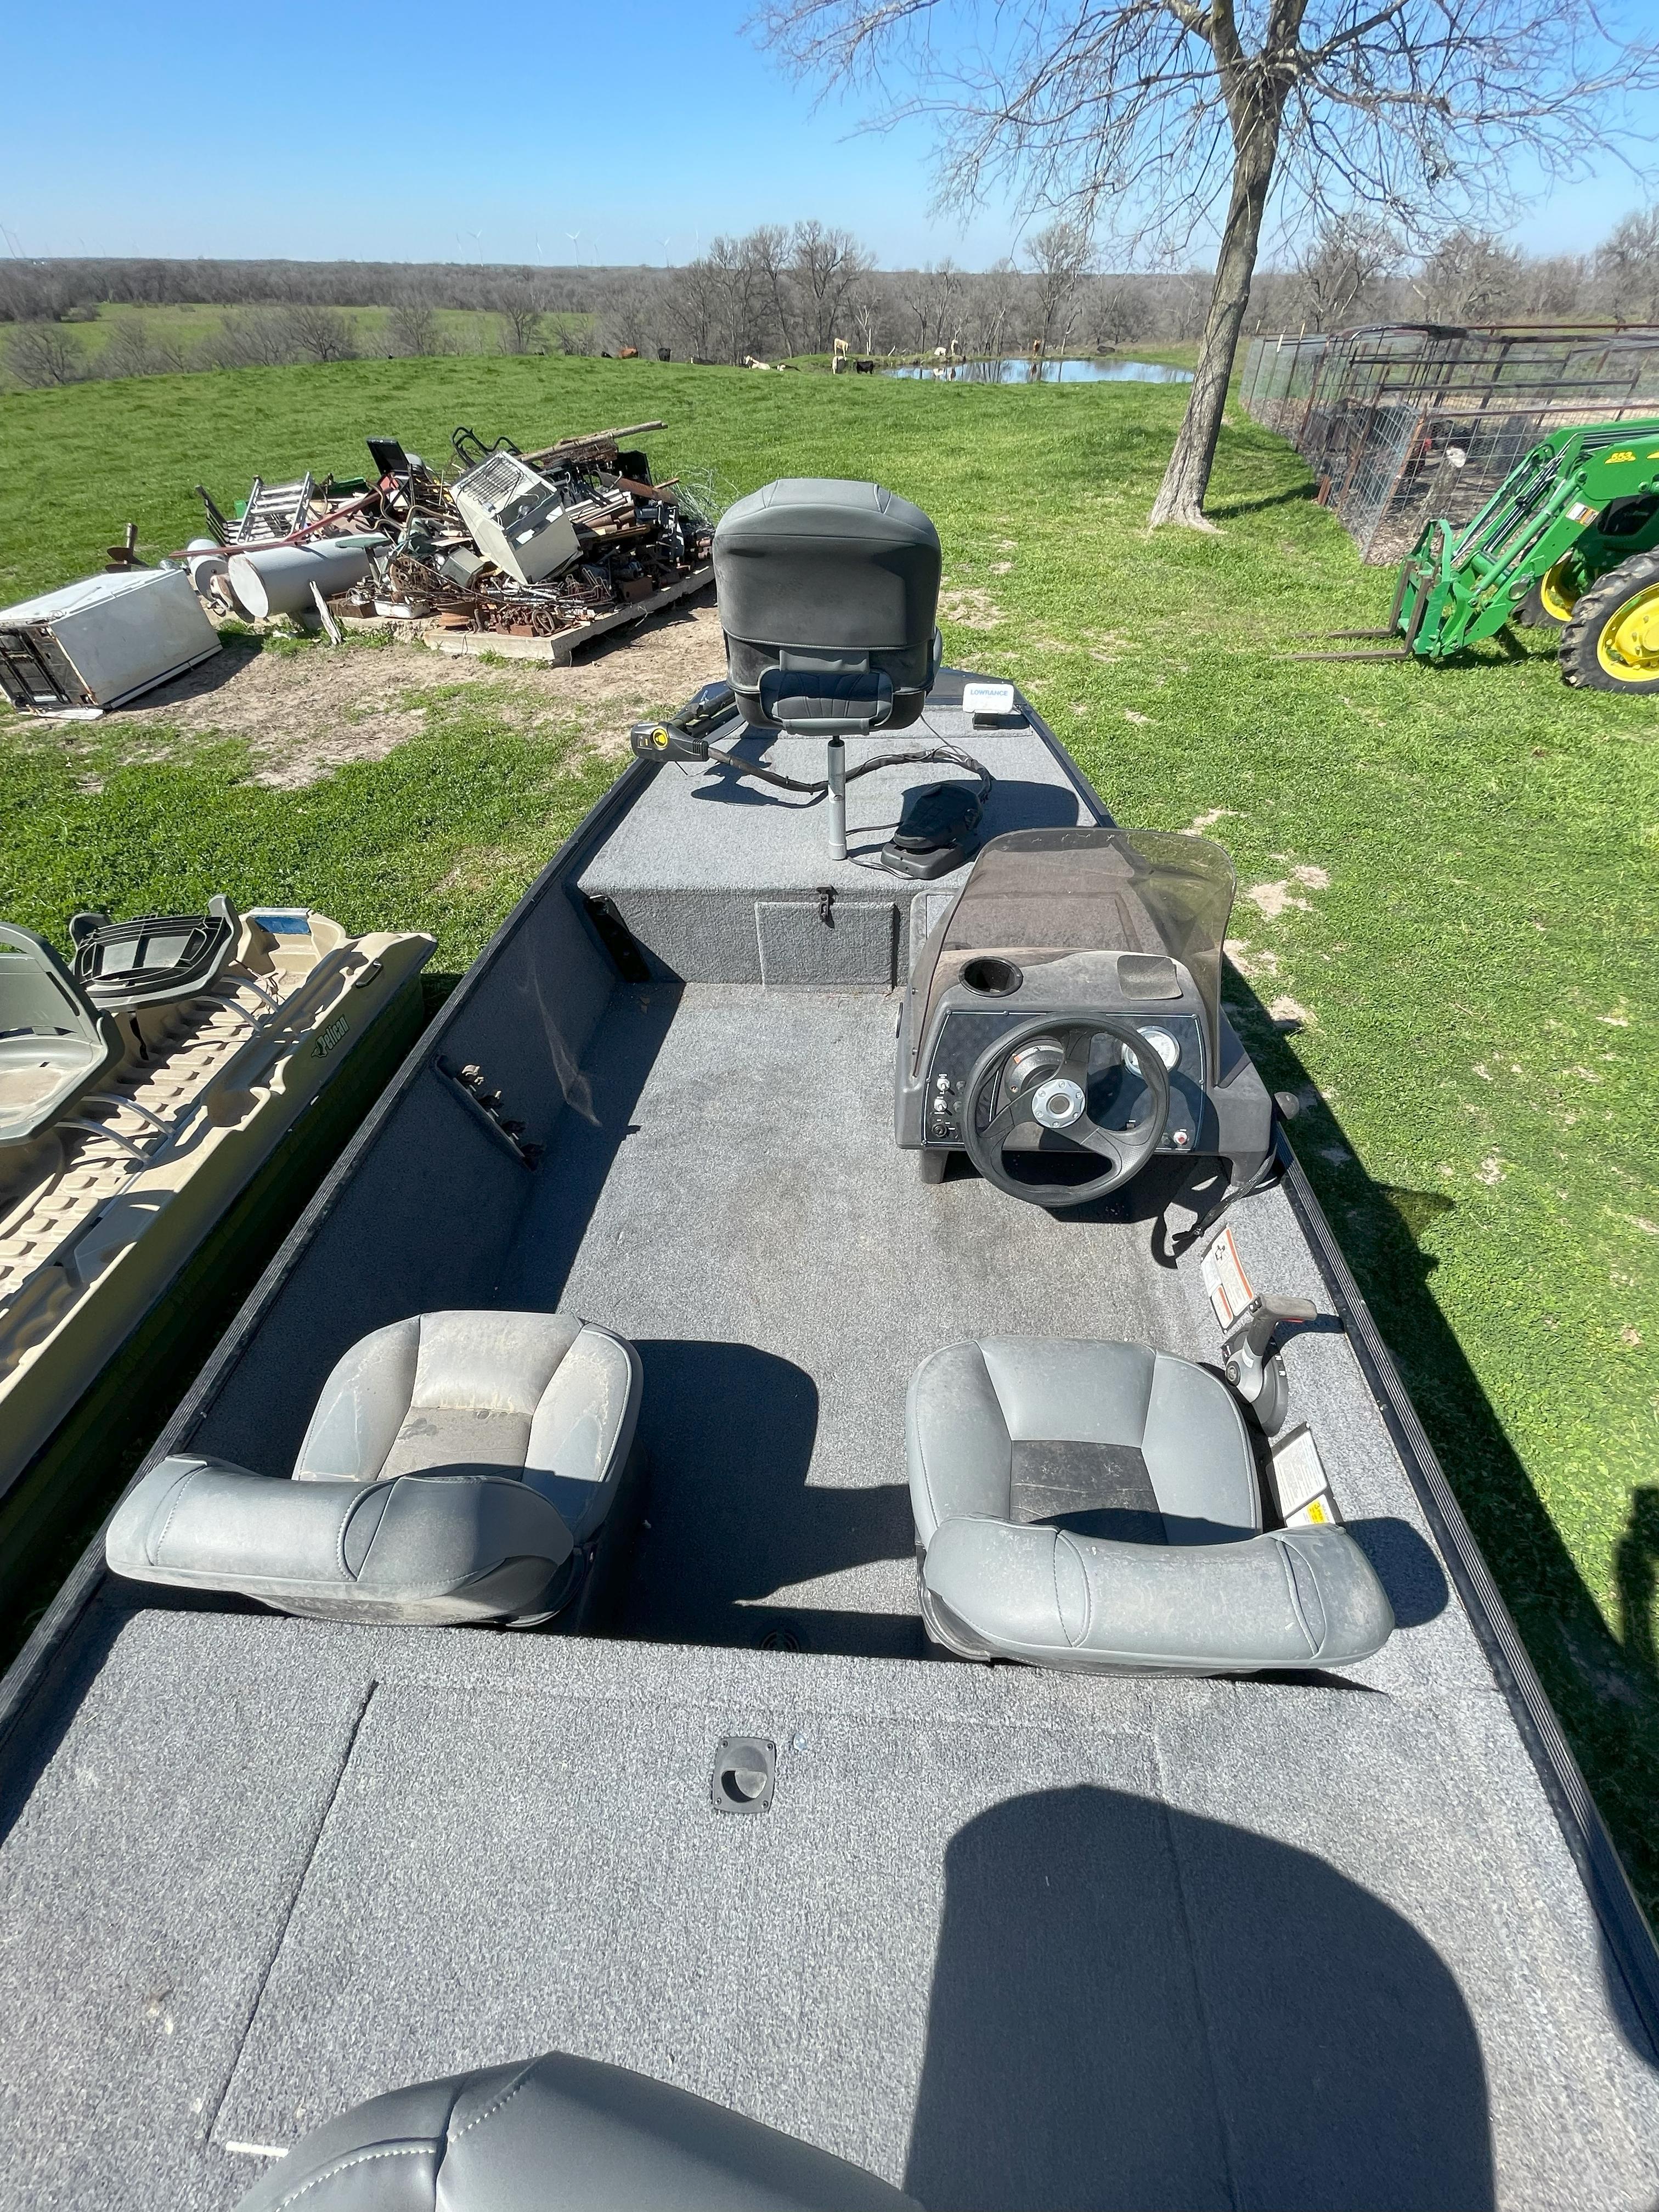 LOCATION WORTHAM, TX: 2019 Tracker Classic XL Aluminum Hull Bass Boat, 16' 8" Length, 6' 5" Beam, 78